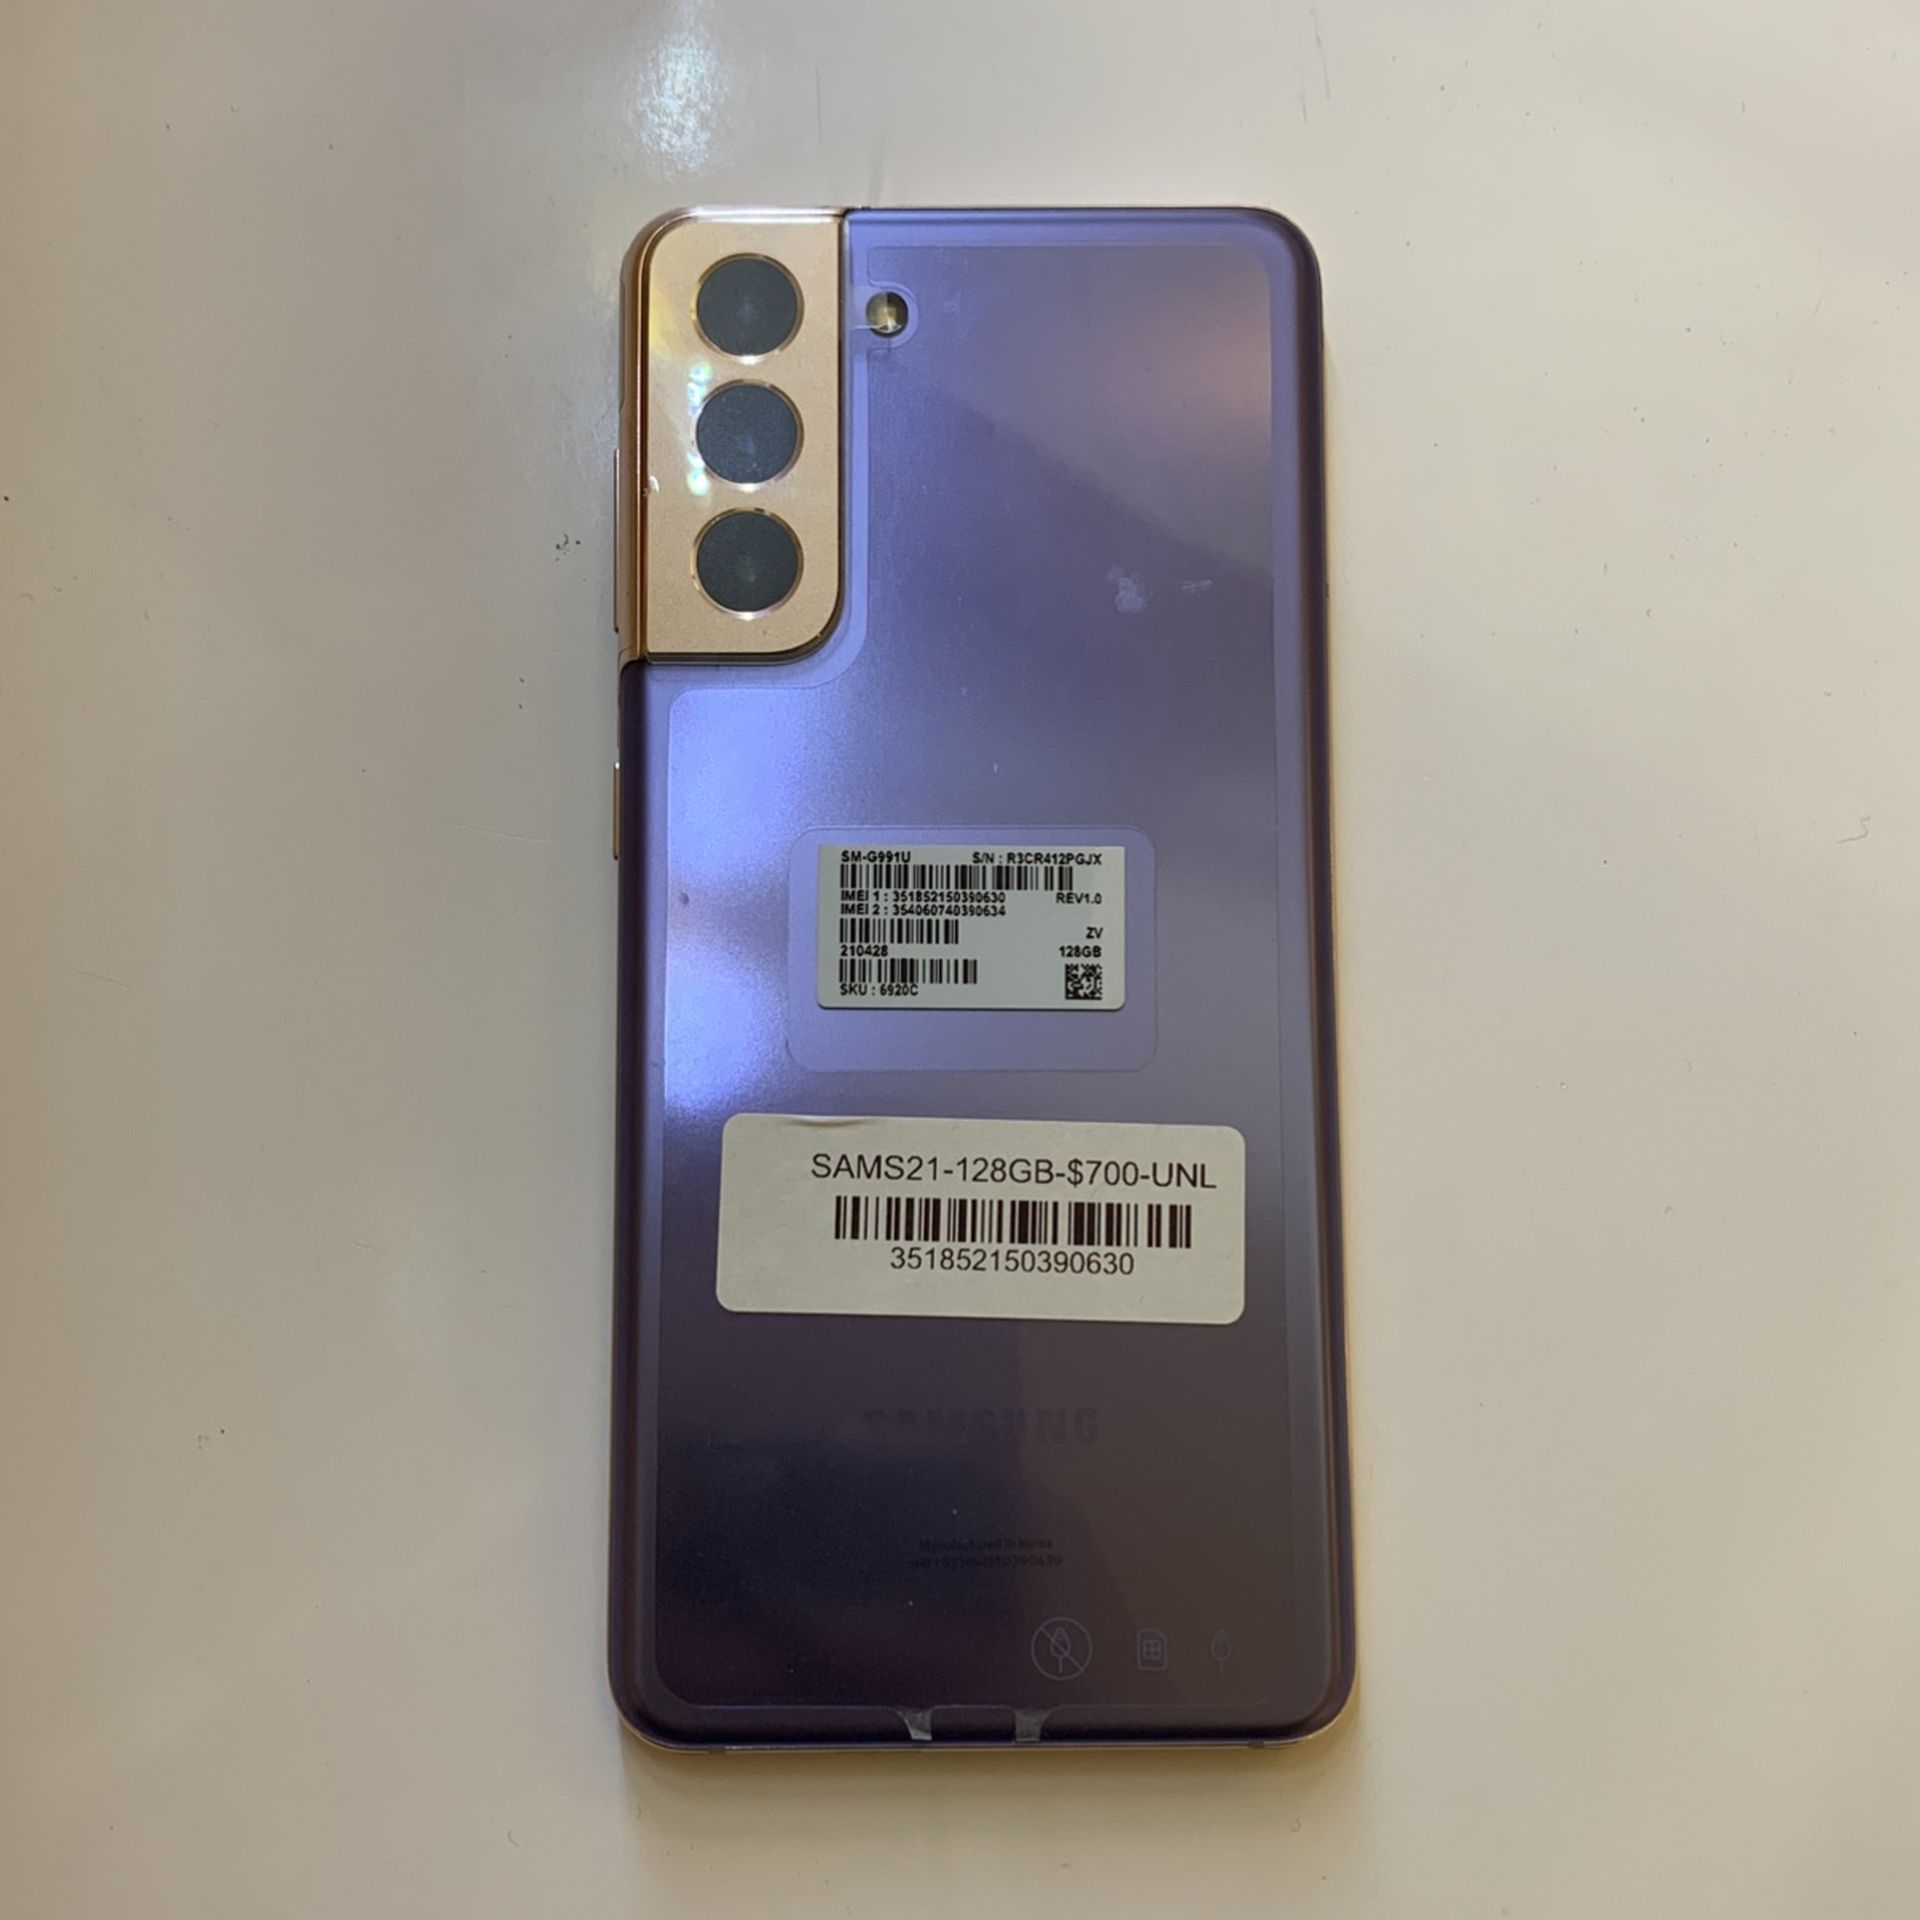 Samsung S21 - 128GB Unlocked 